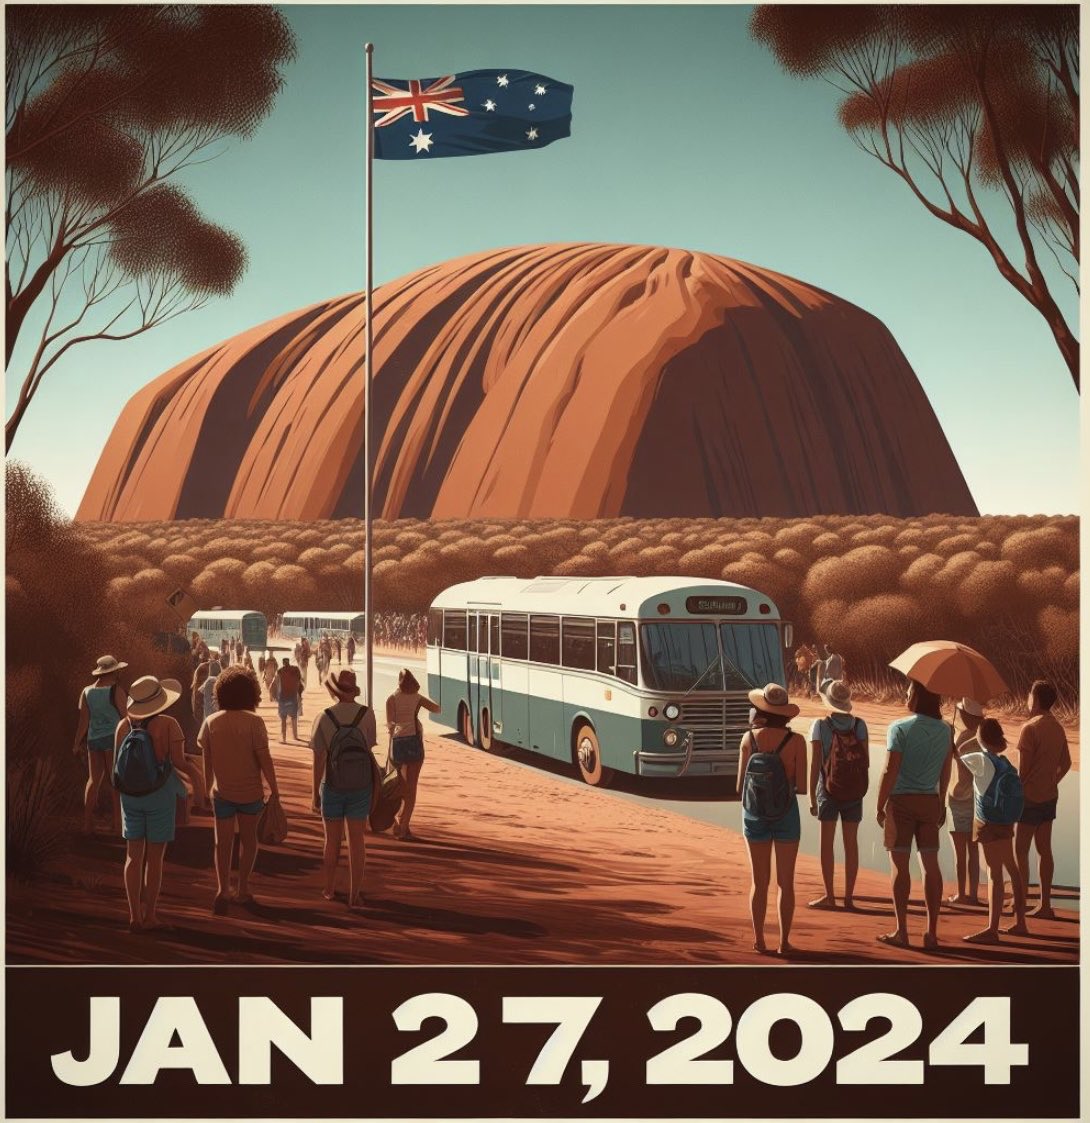 Daily poster. Ayer’s Rock, Australia. Respect for Uluru. No more climbing!
🇦🇺🦘

#AIartistcommunity #Get_StarryAI #ainksyai #DALLE3 #aiartcommunity  #digitalart #LeonardoAI_ #aiartist
#Australia #AyersRock #Uluru #AliceSprings #Crikey #Aboriginal